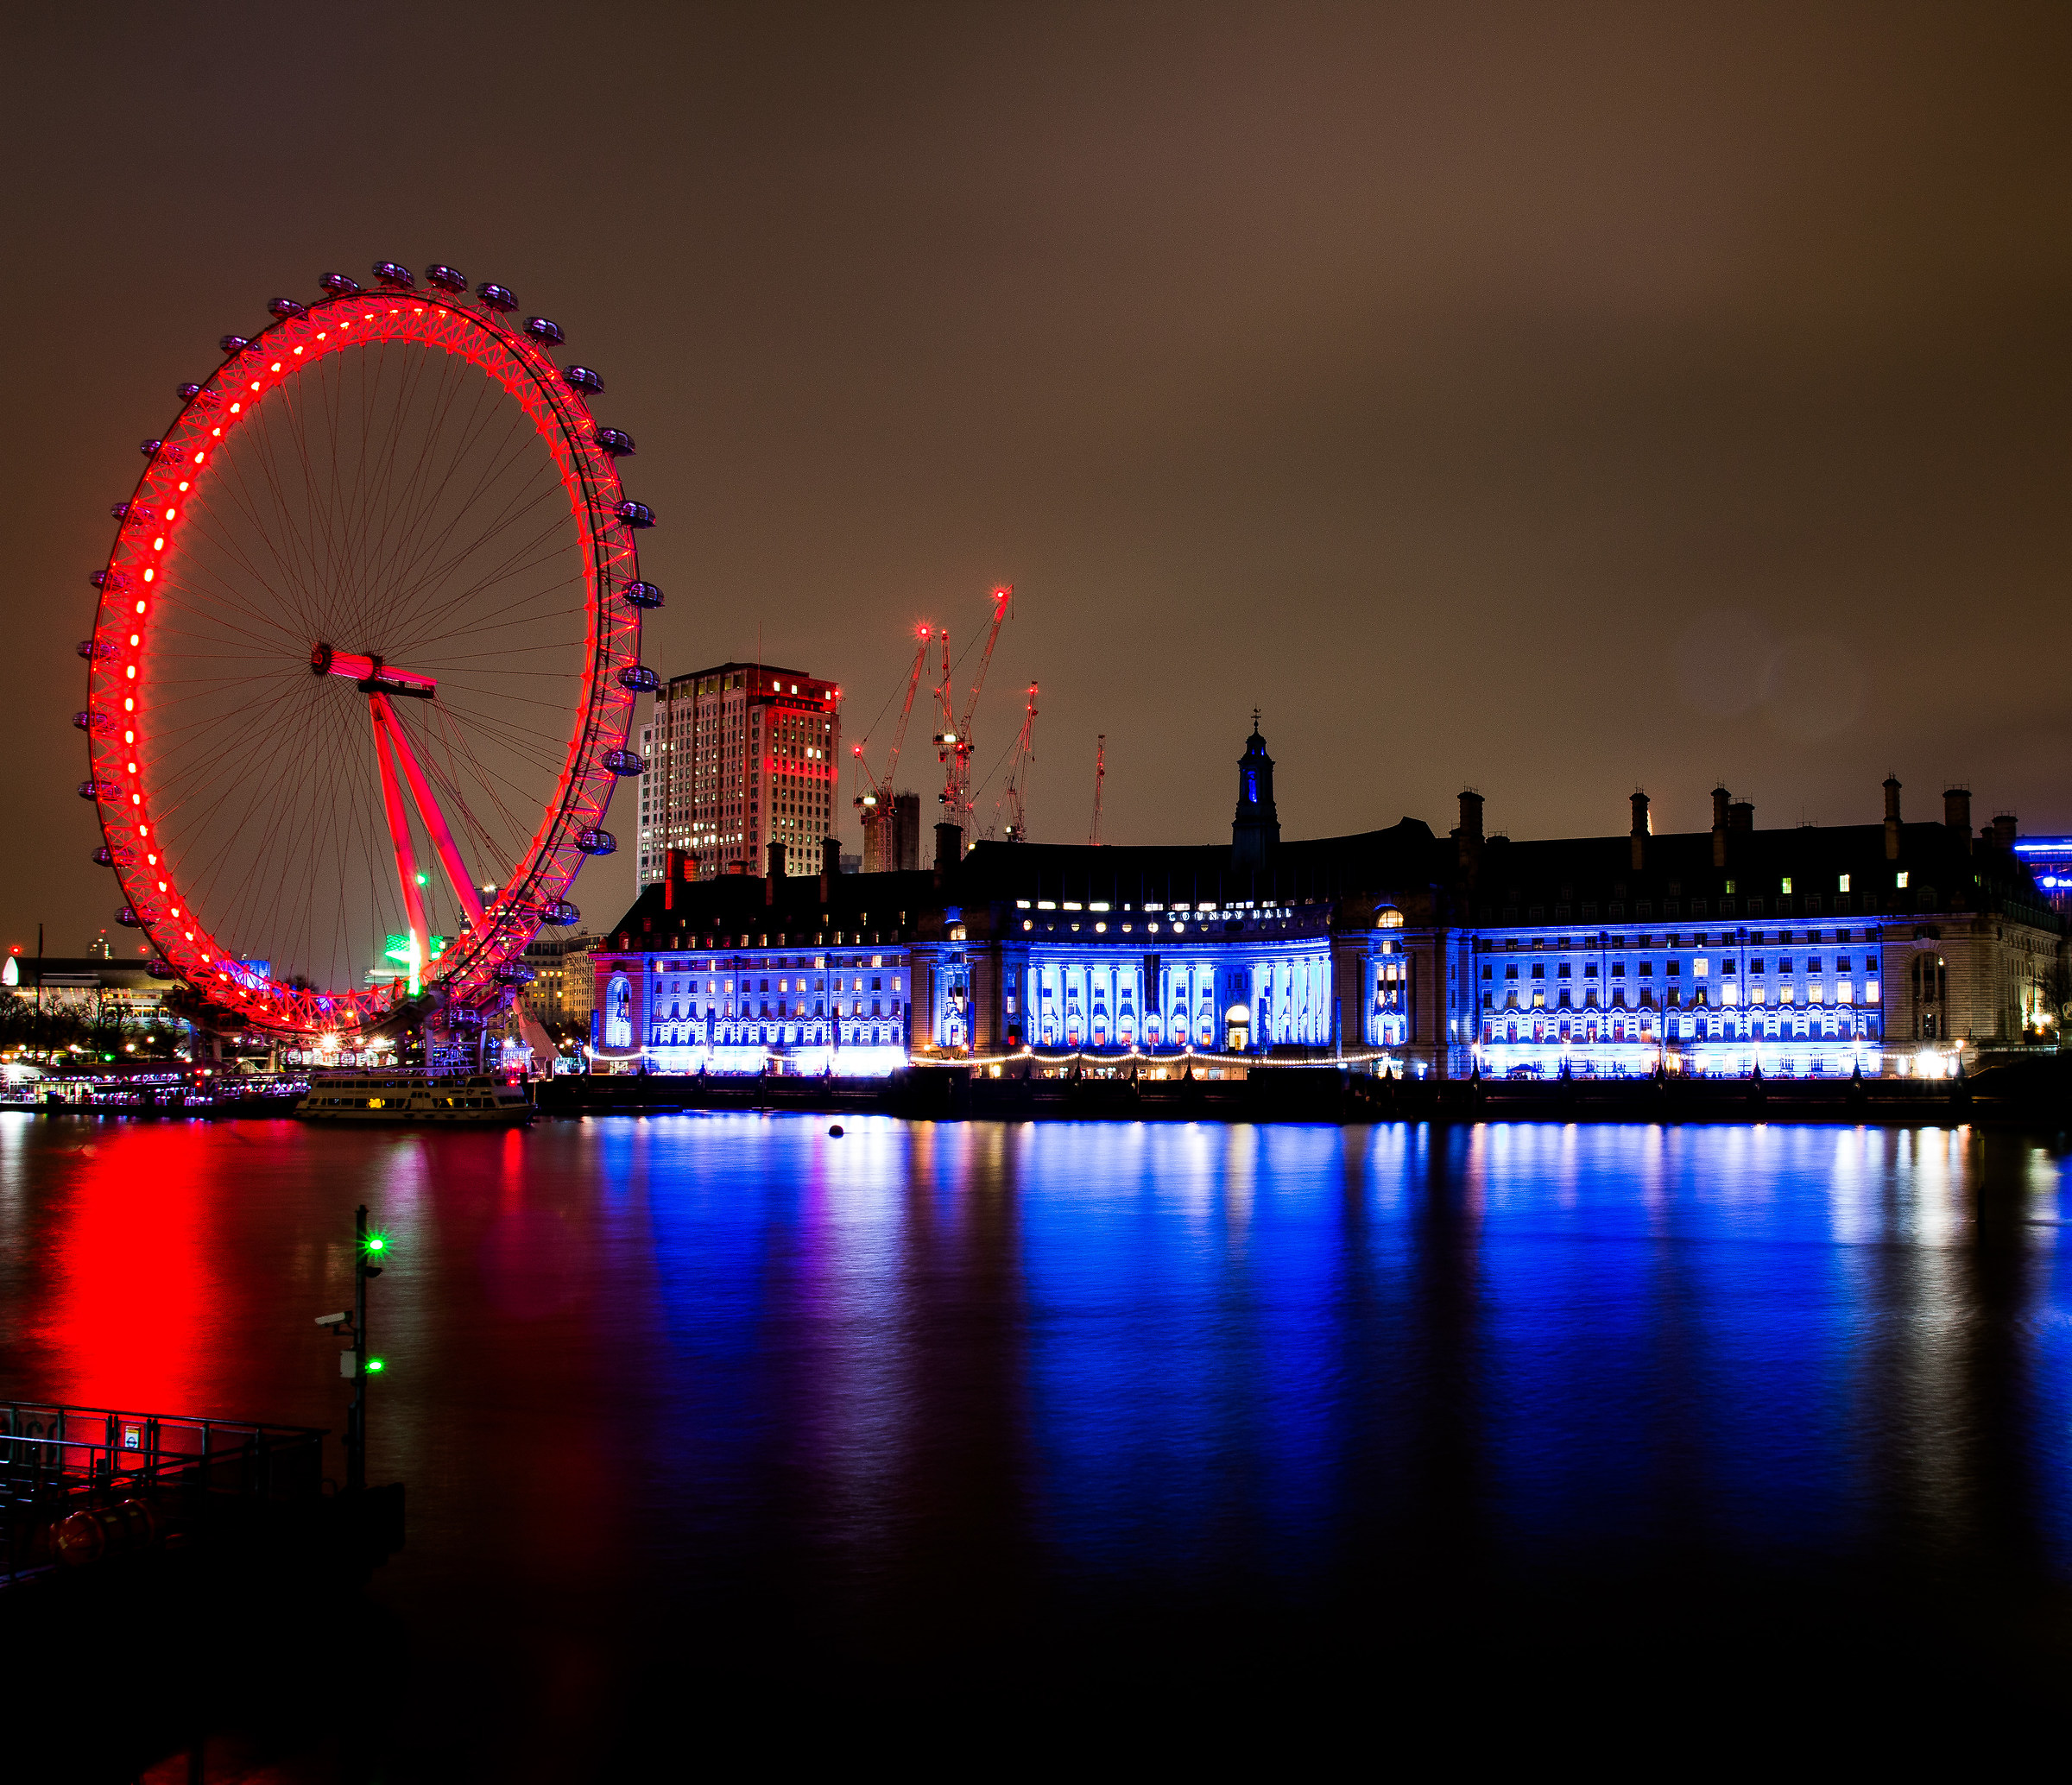 London by night...